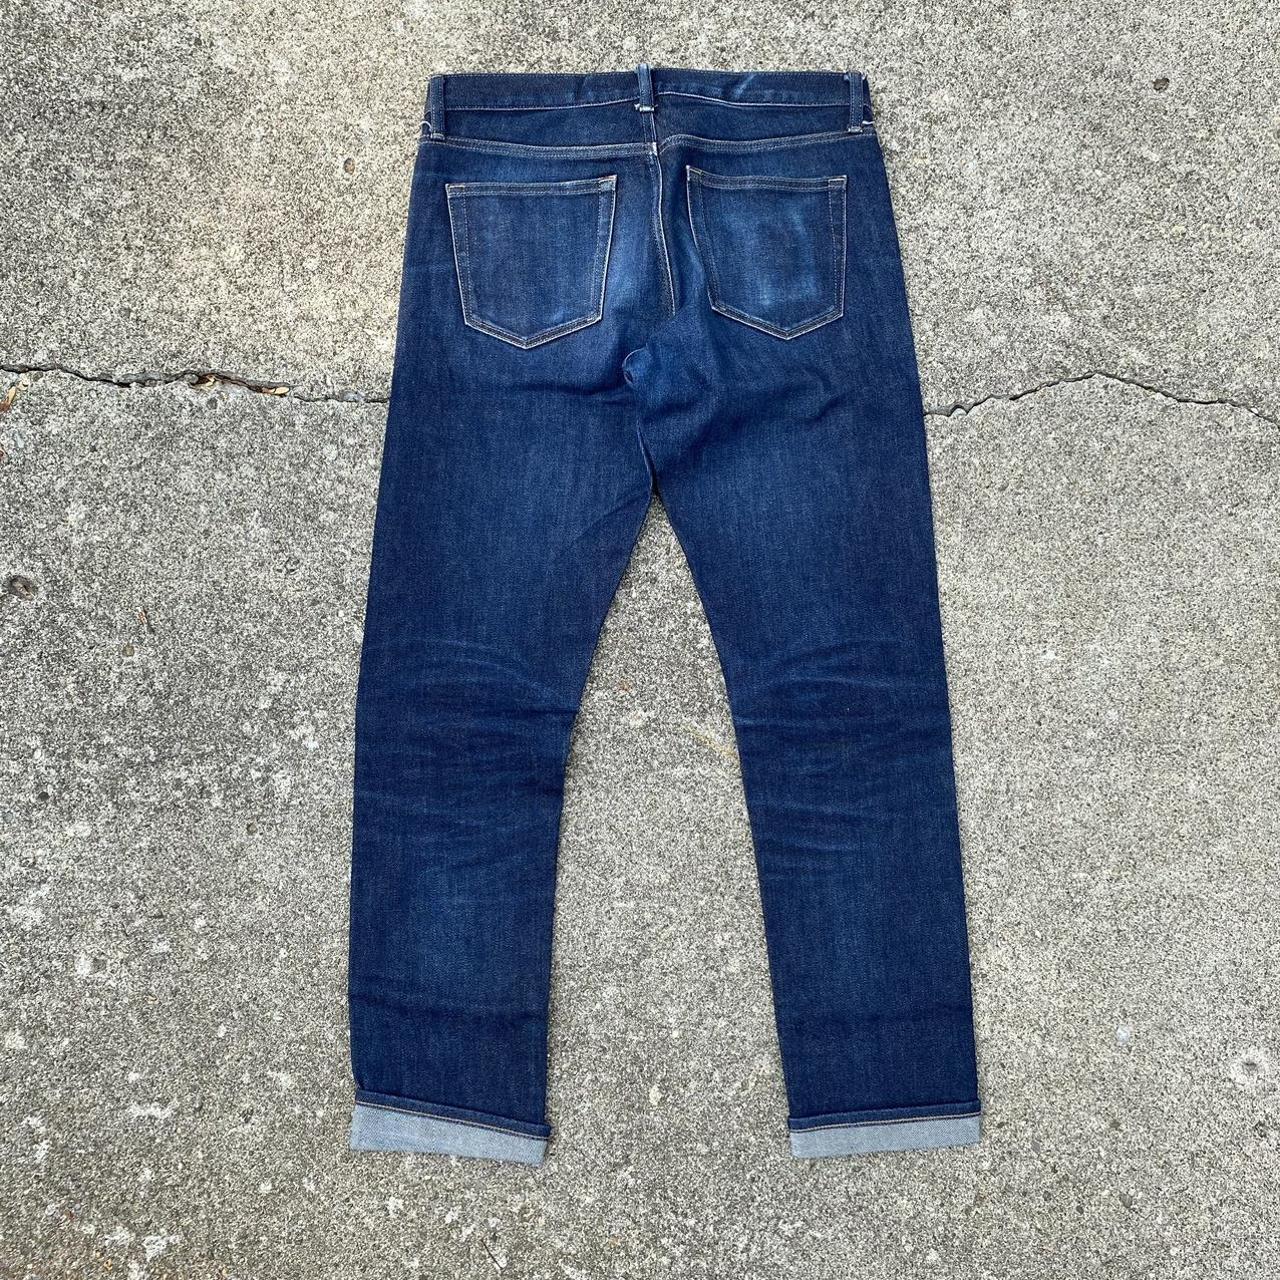 Uniqlo Raw Redline Selvedge Blue Jeans Measured... - Depop